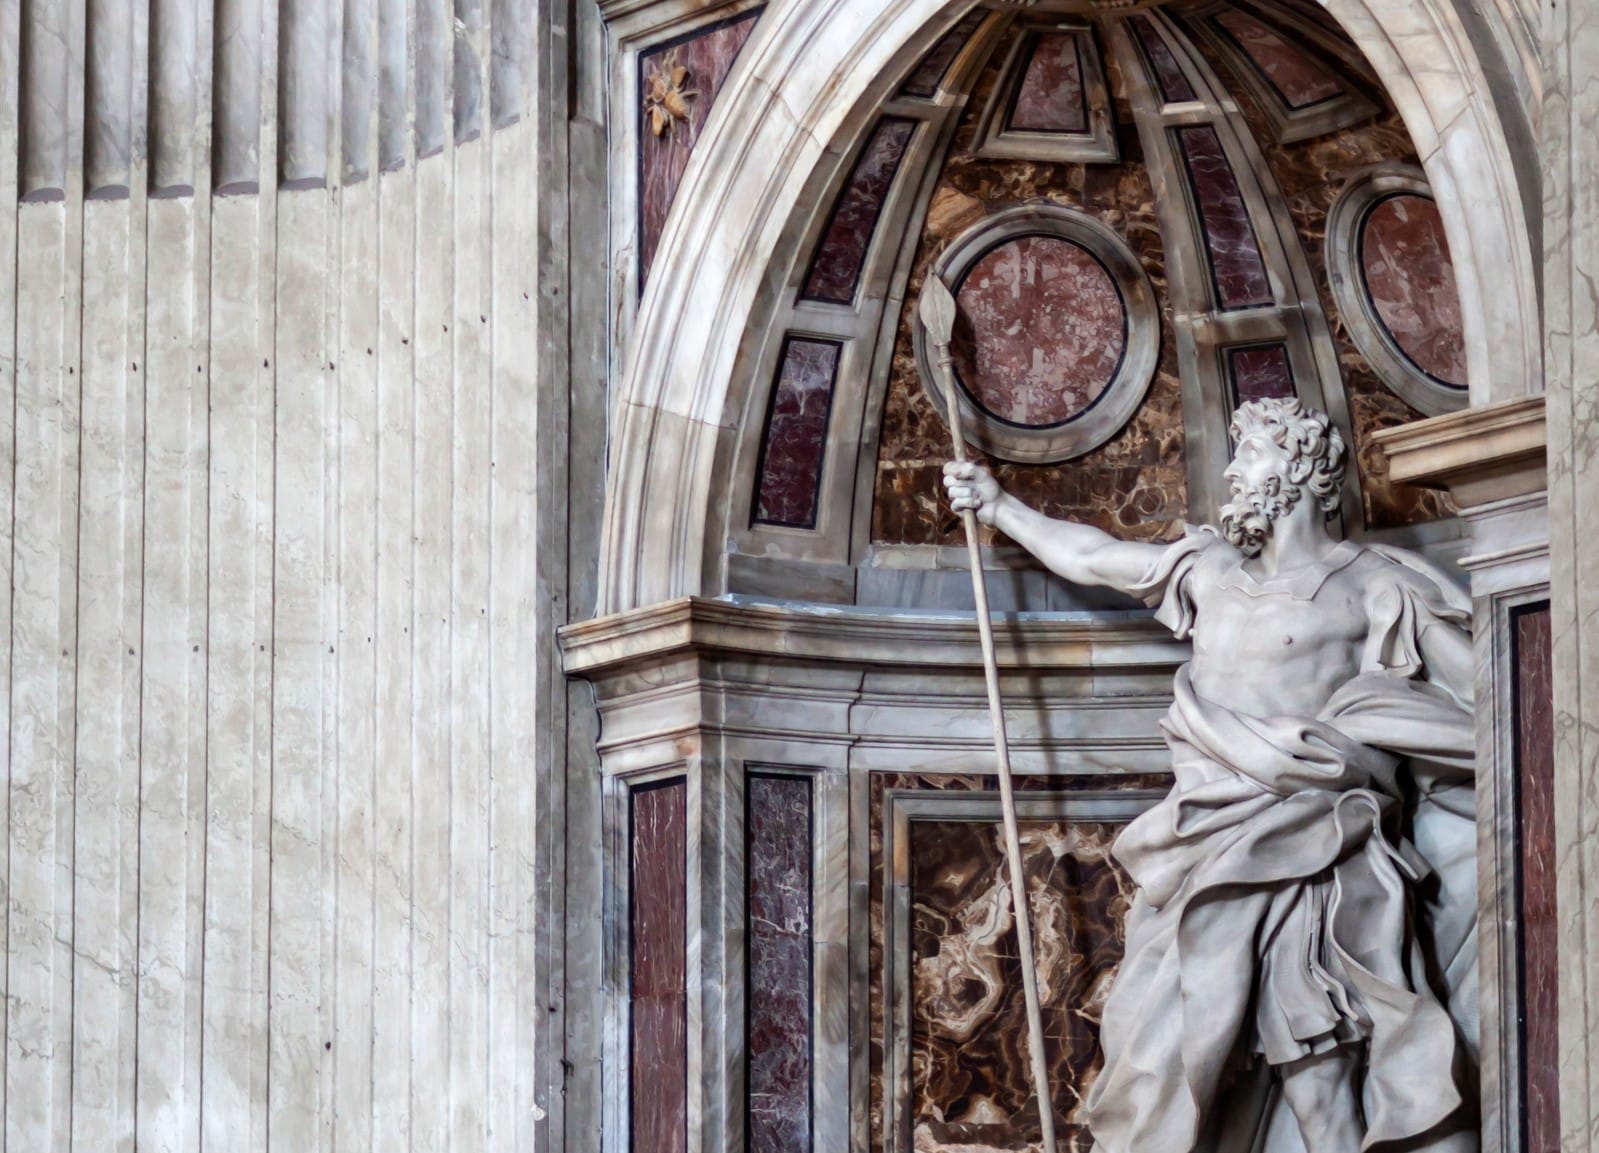 Statue of St. Longinus - Saint Peter's Basilica in Vatican City